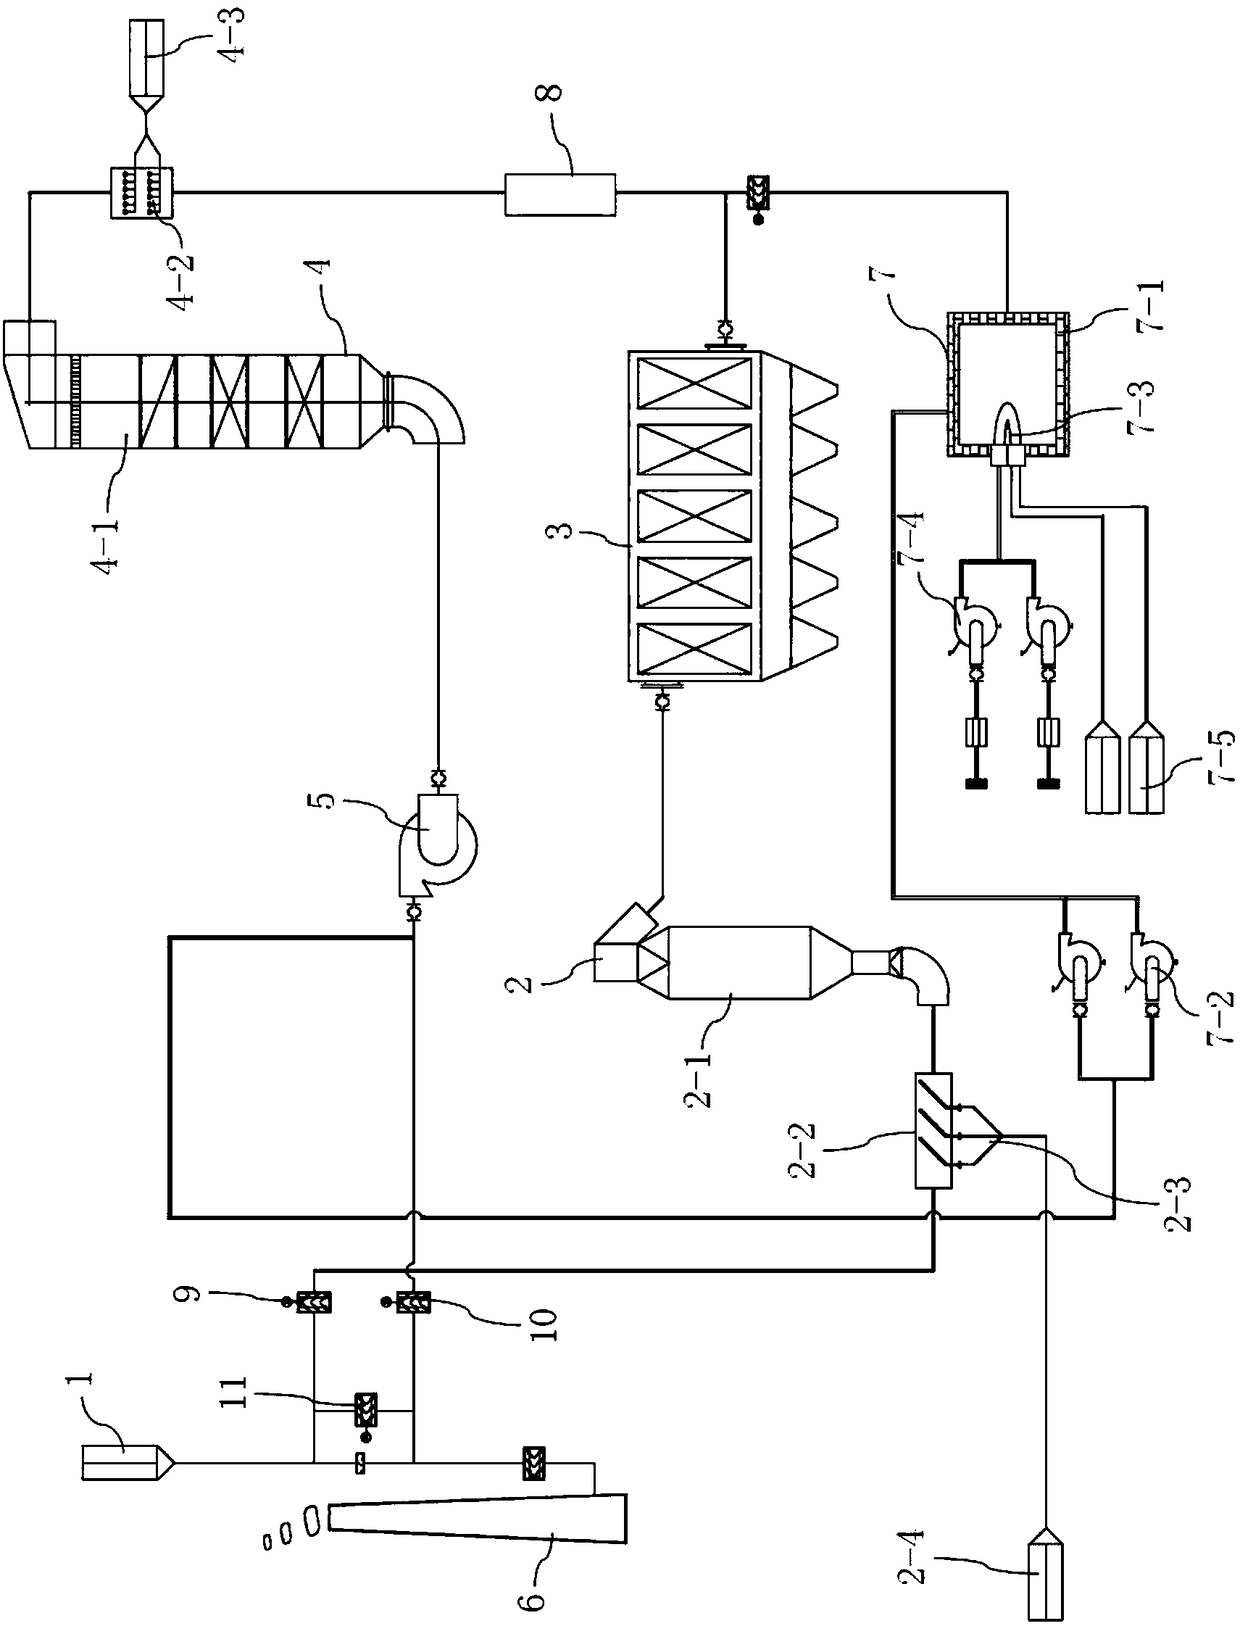 Desulfurization-denitrification-dedusting integrated device of coke oven